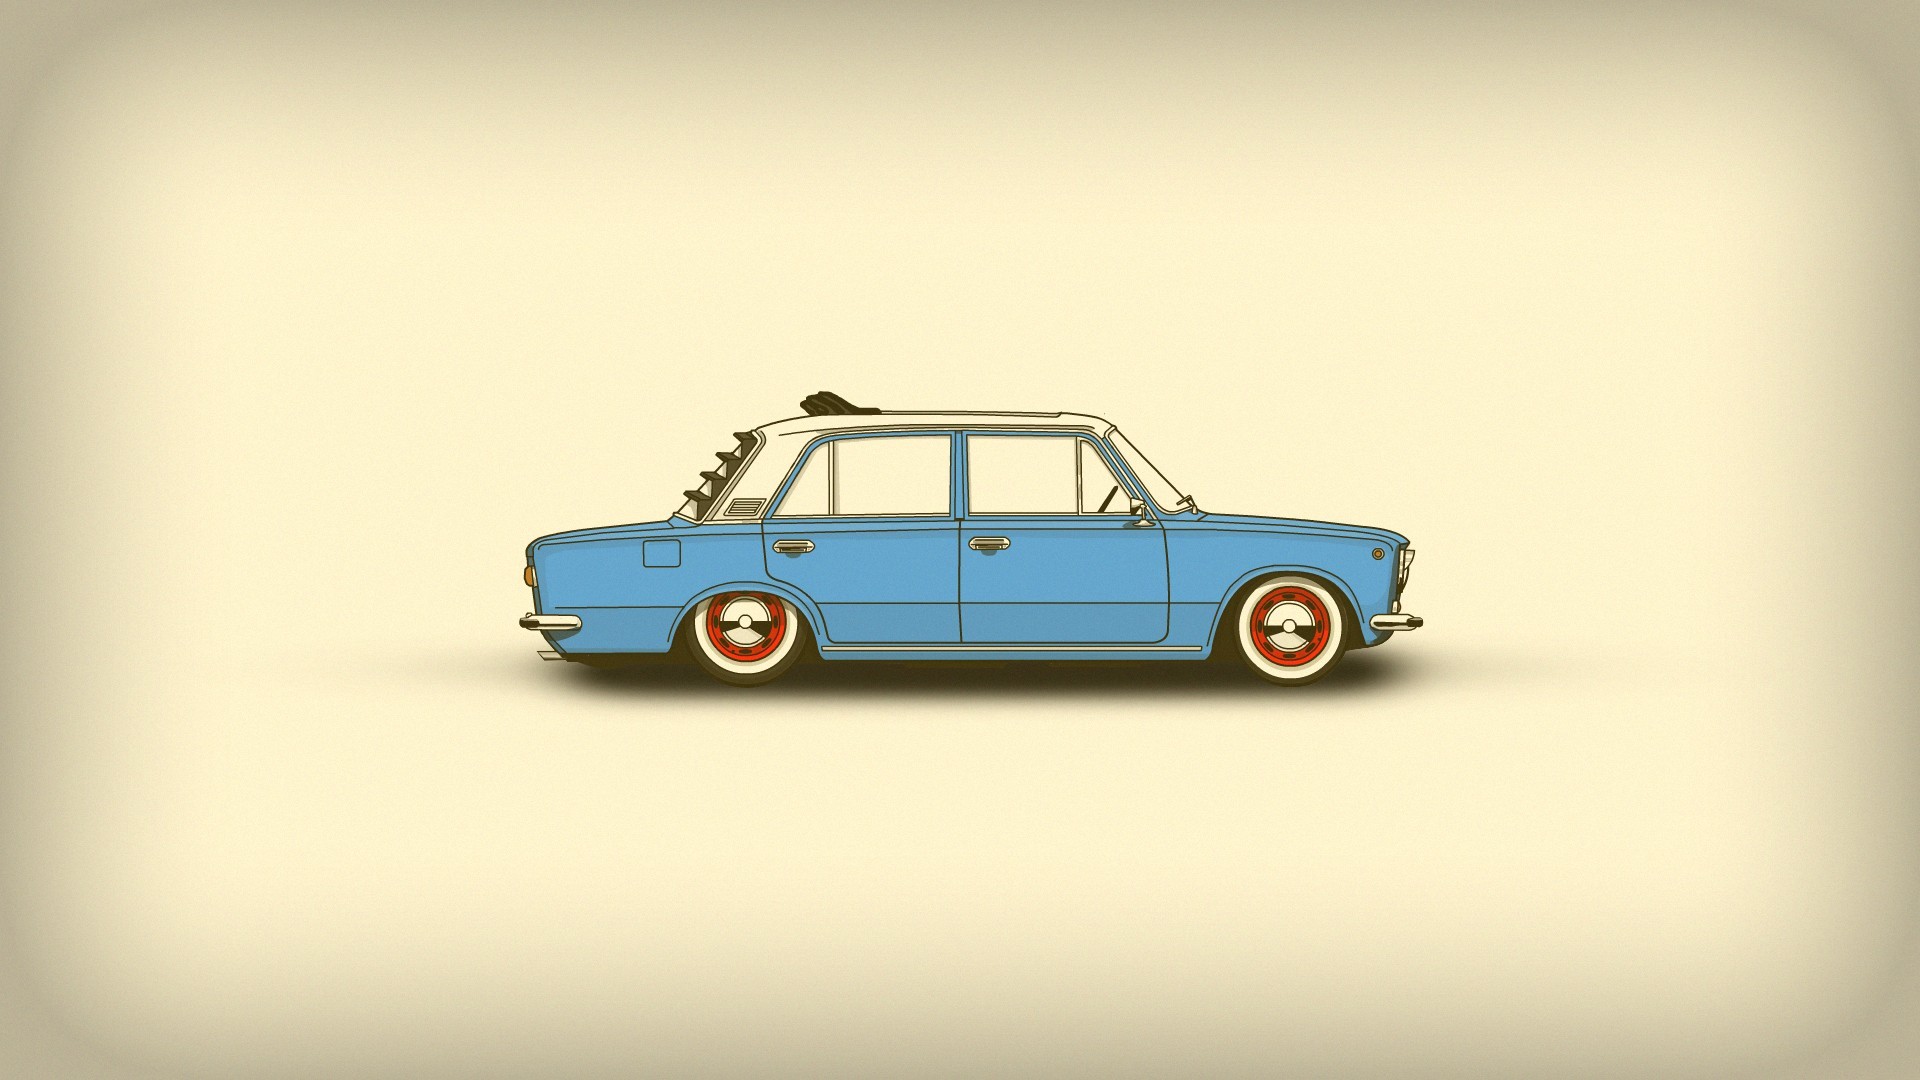 1920x1080 car-minimalism-simple-art.jpg